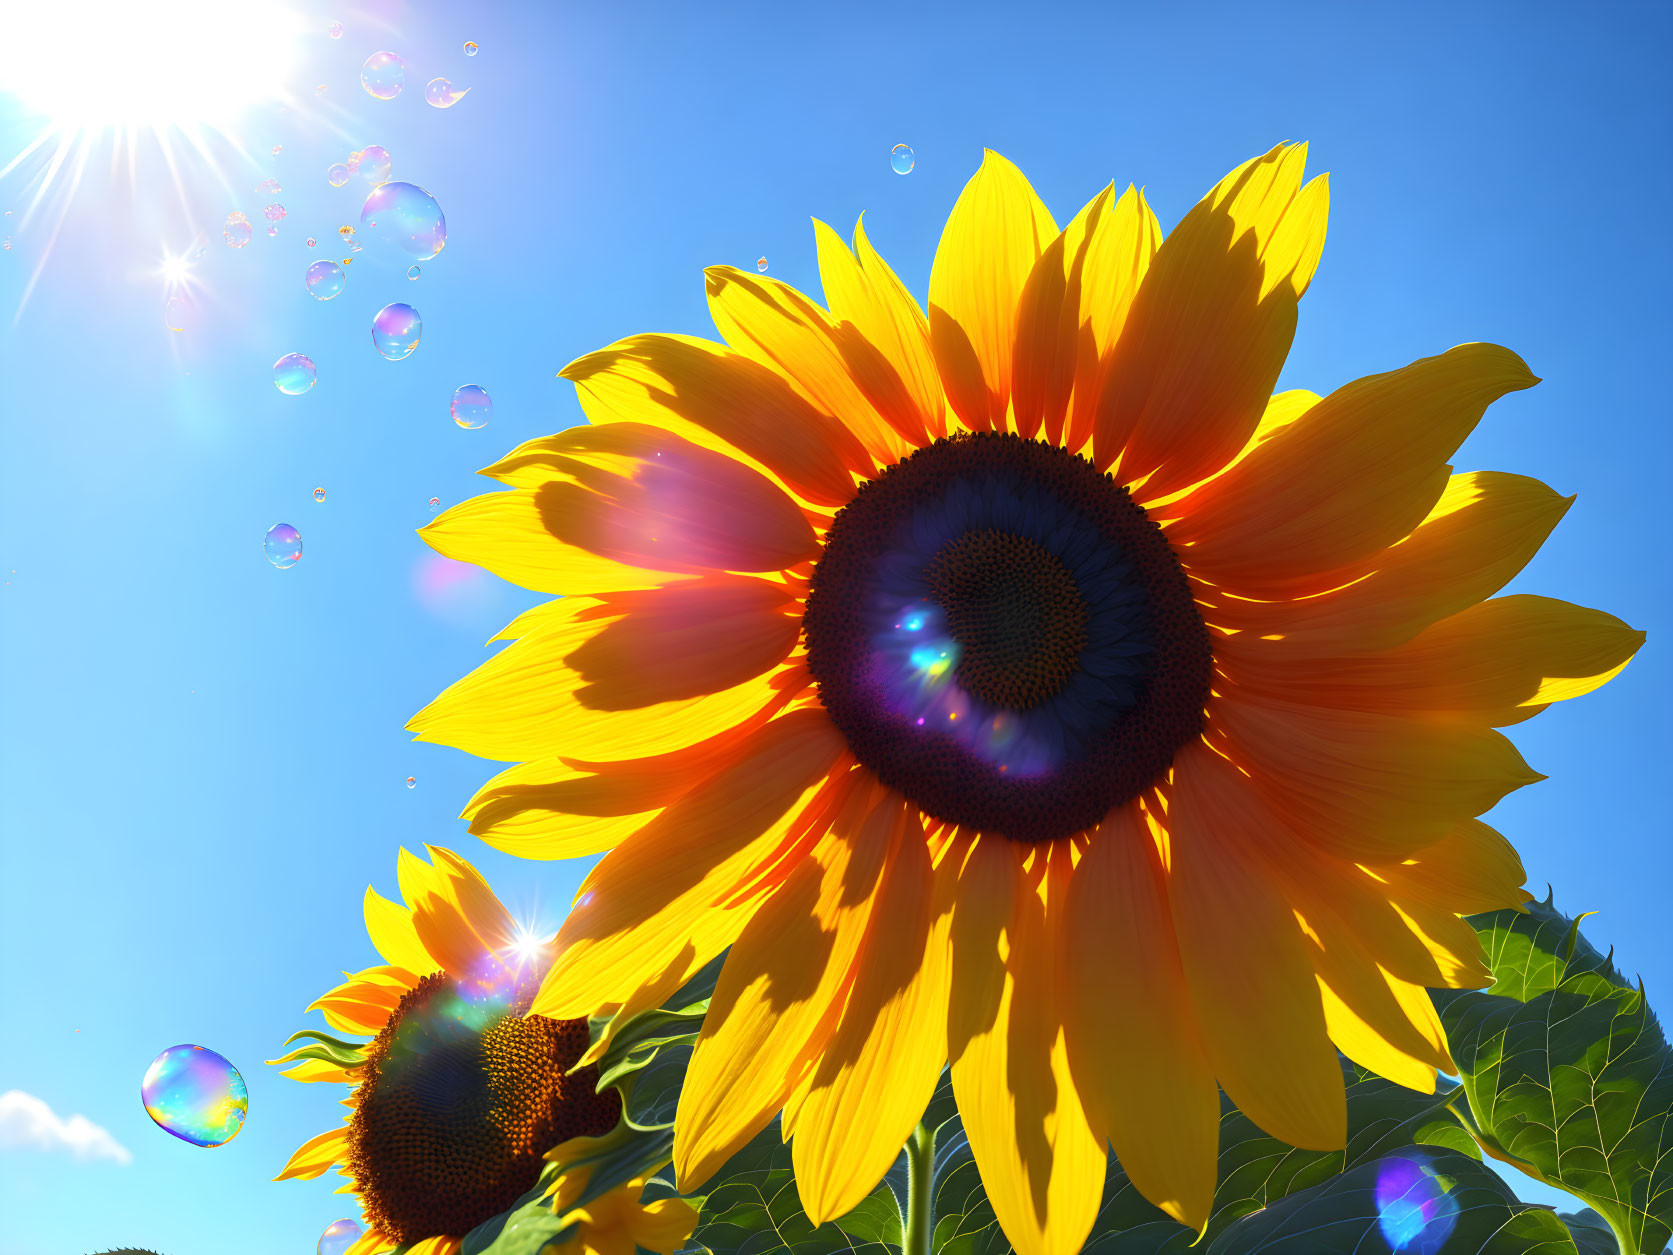 Sunflower, Sunshine, and Rainbow Bubbles 